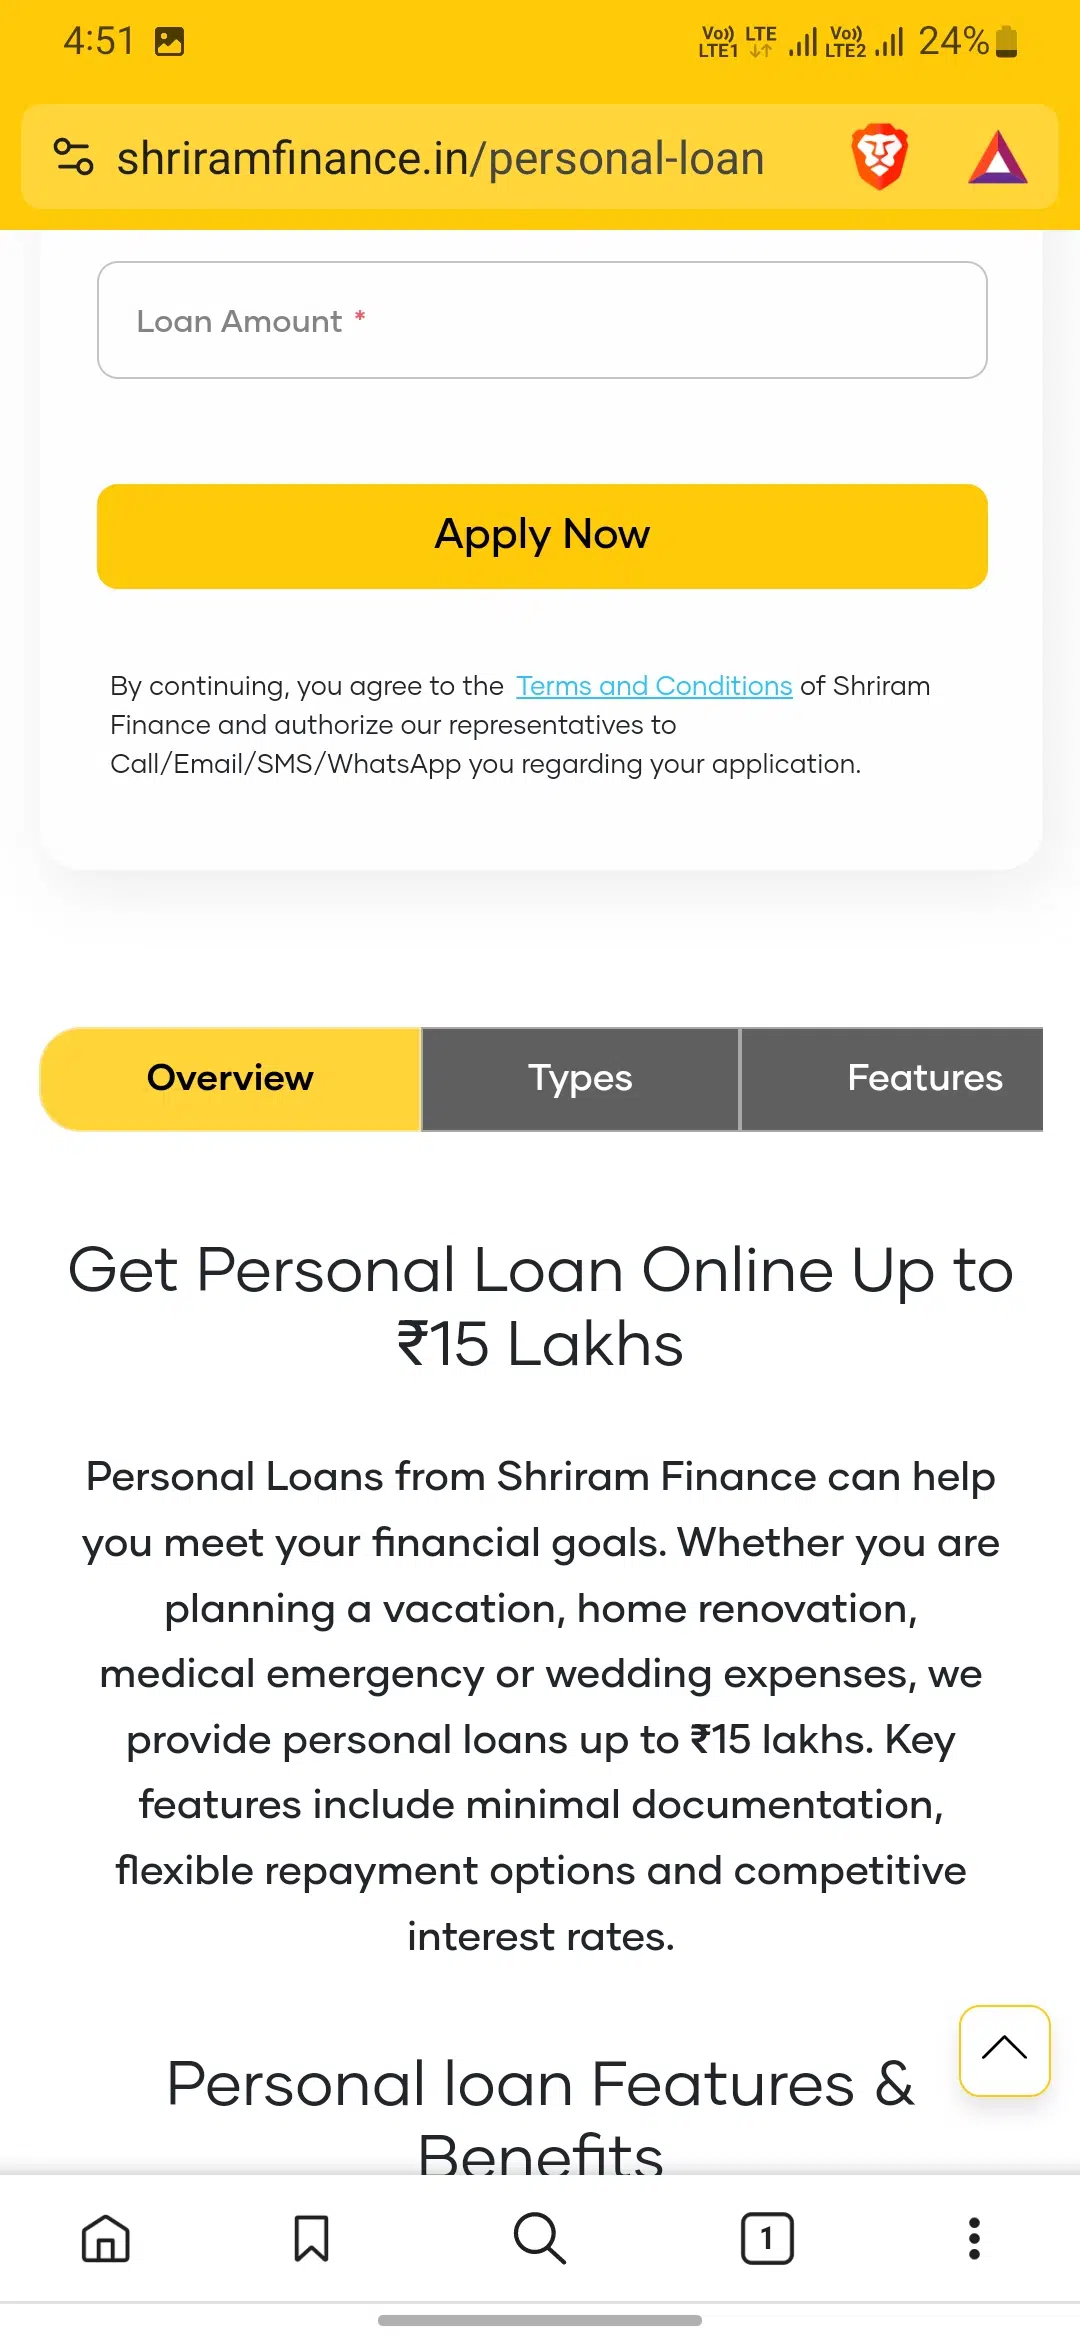 Shriramfinance personal loan overviews details